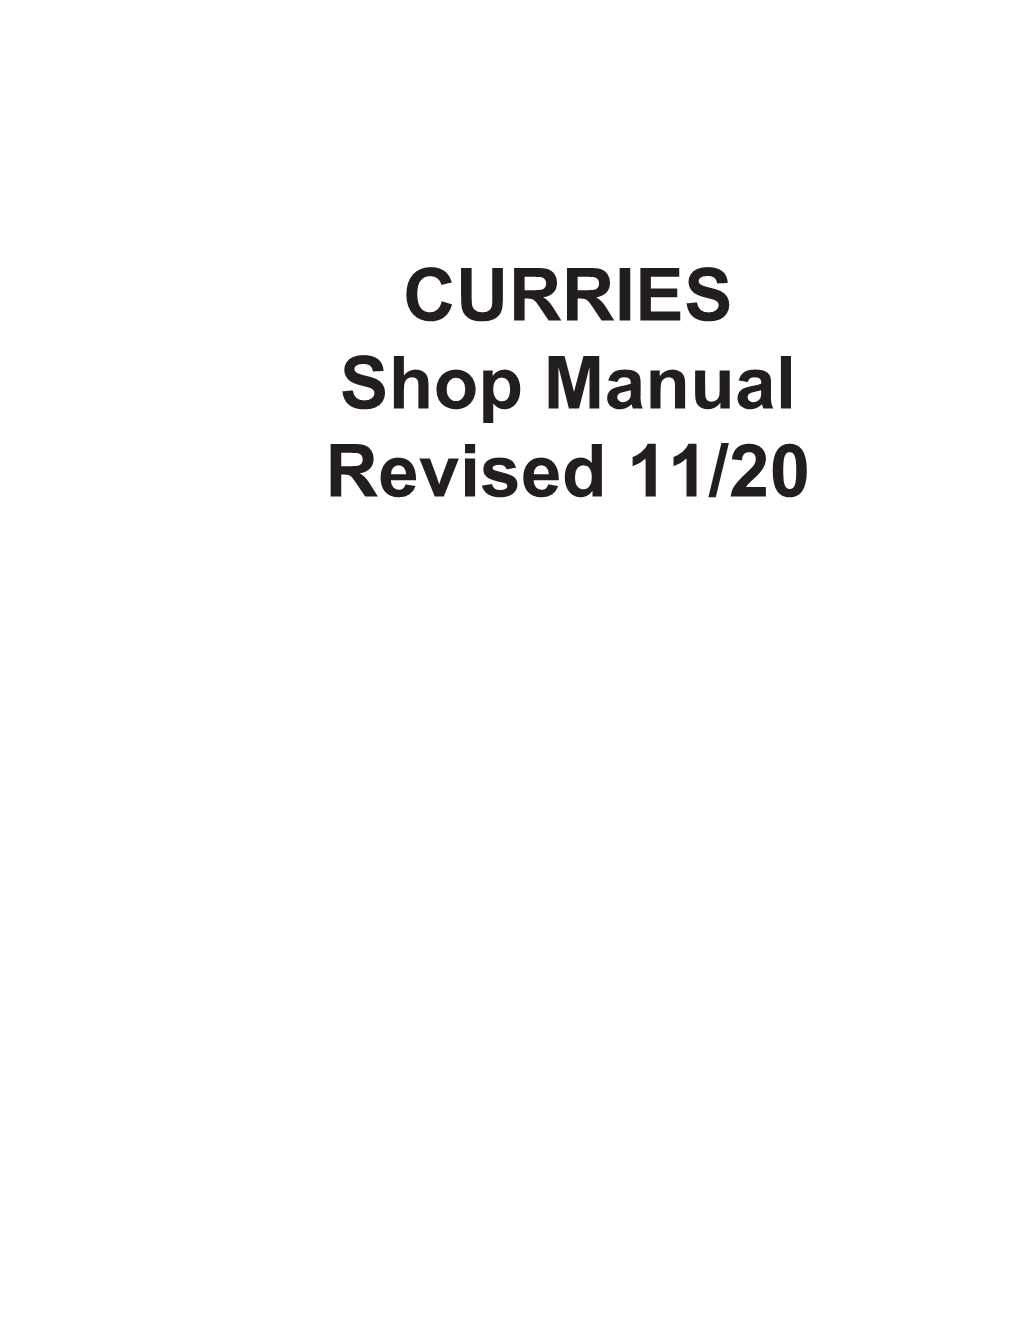 CURRIES Shop Manual Revised 11/20